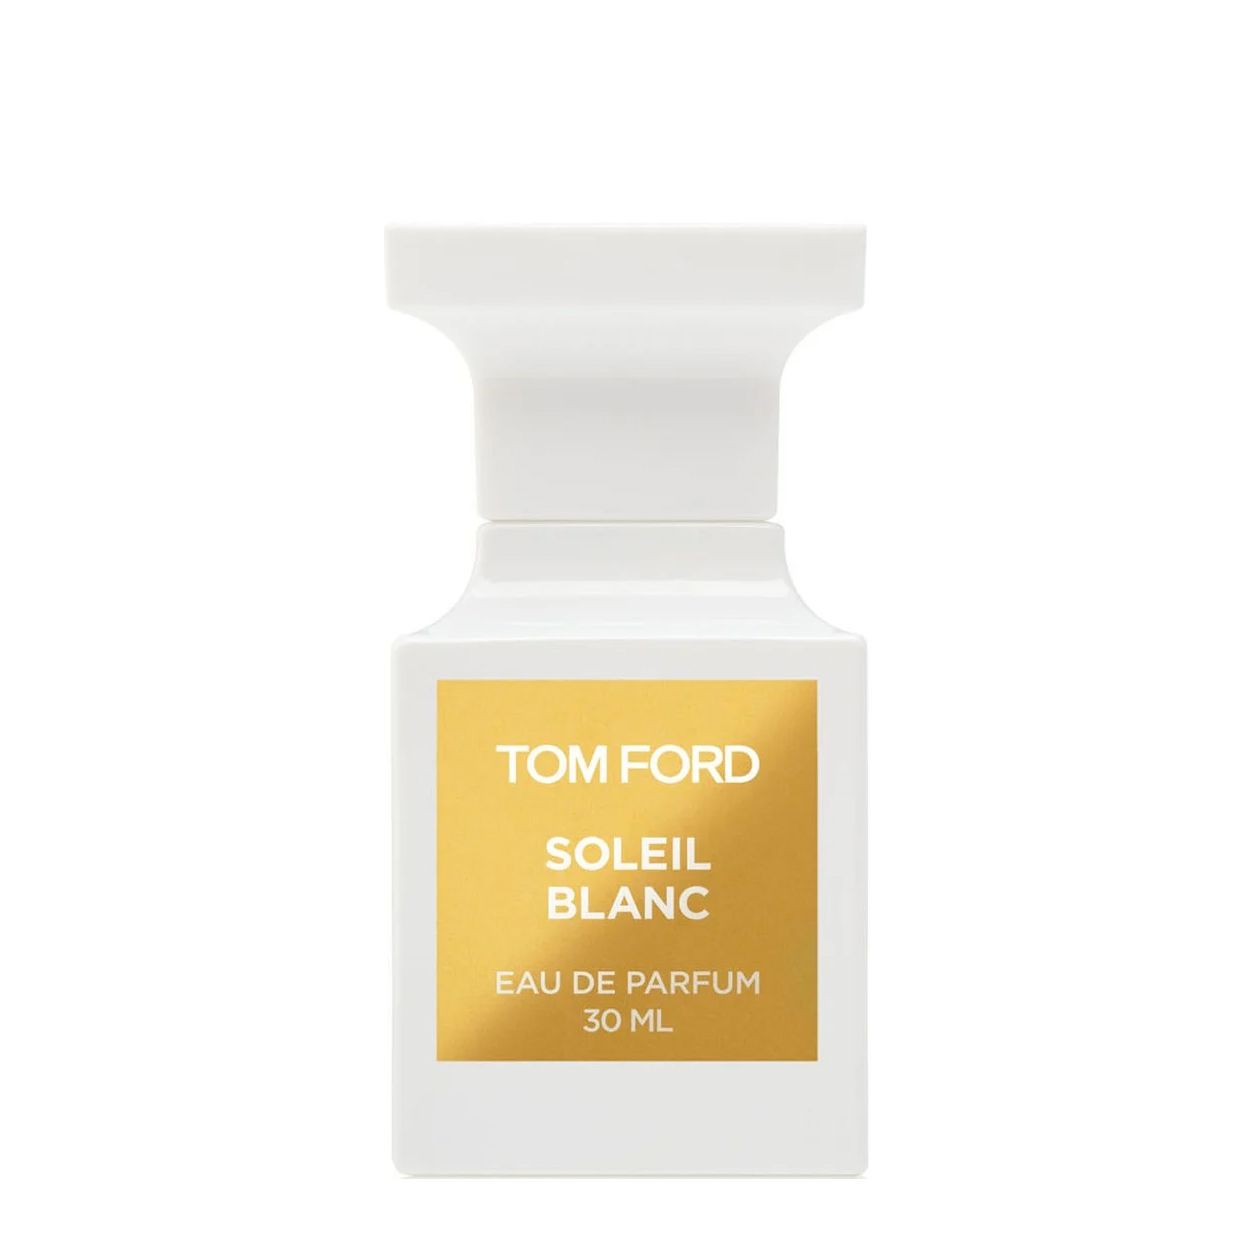 Вода парфюмерная Tom Ford Soleil Blanc, унисекс, 30 мл tom ford румяна хайлайтер soleil sheer cheek duo